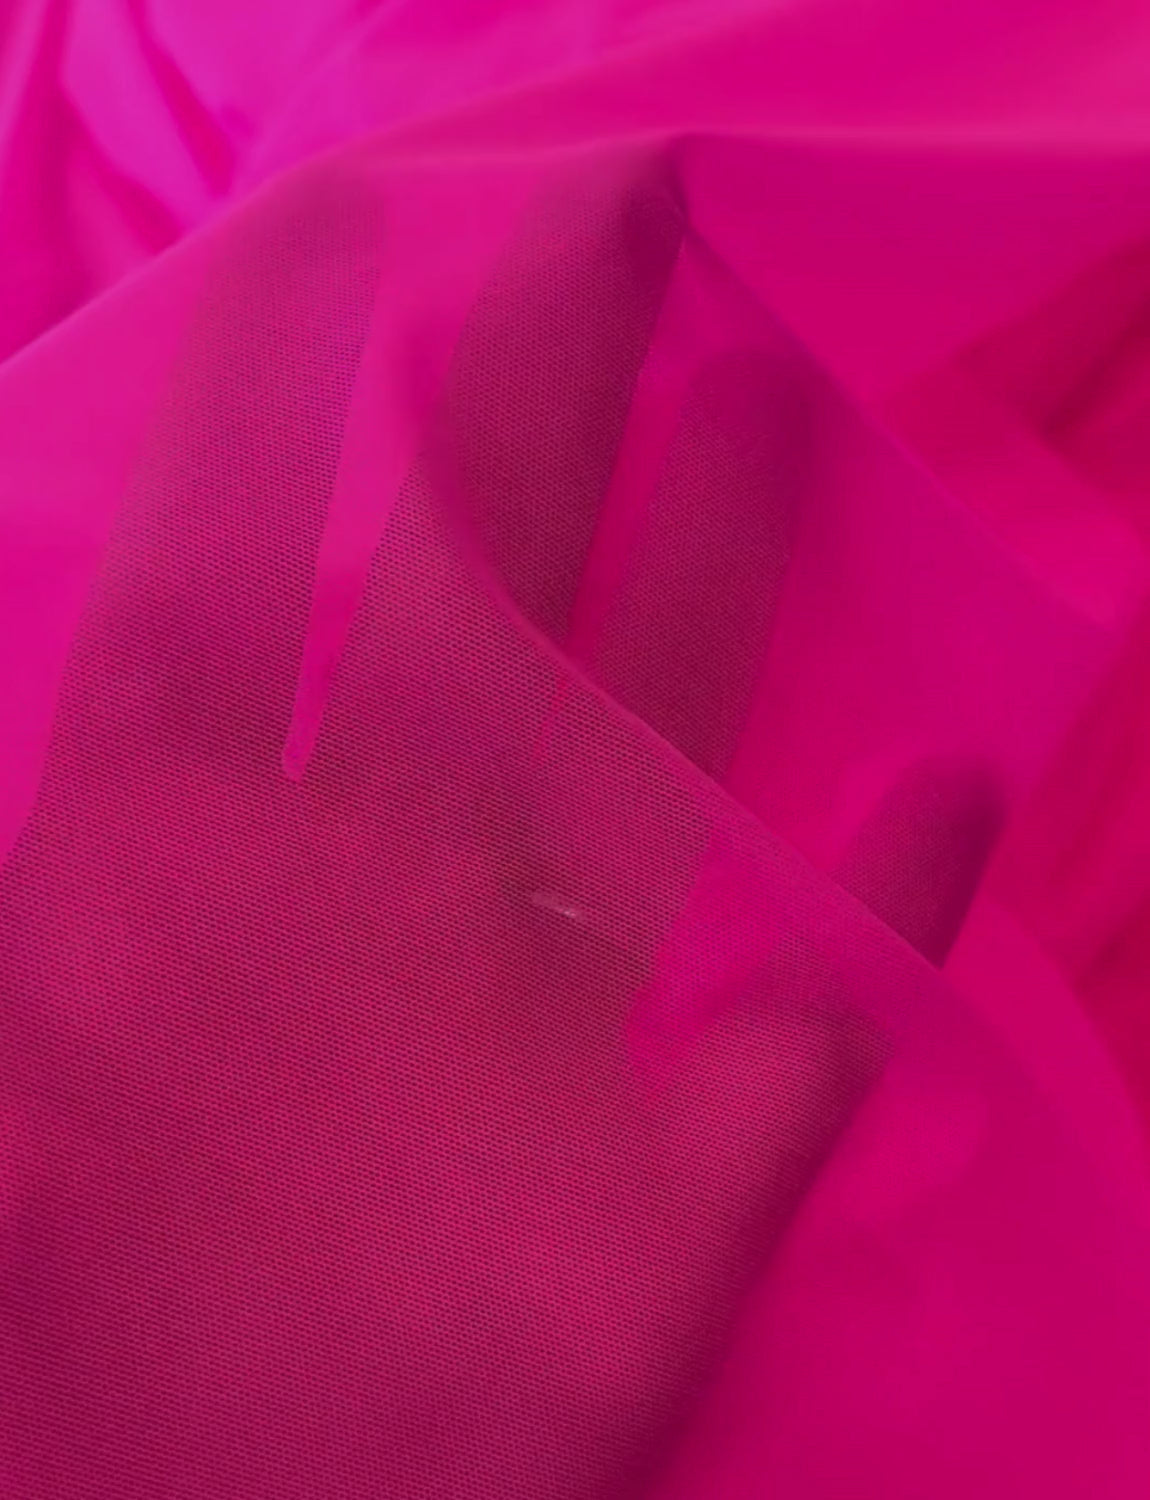 Neon pink mesh stretch fabric.